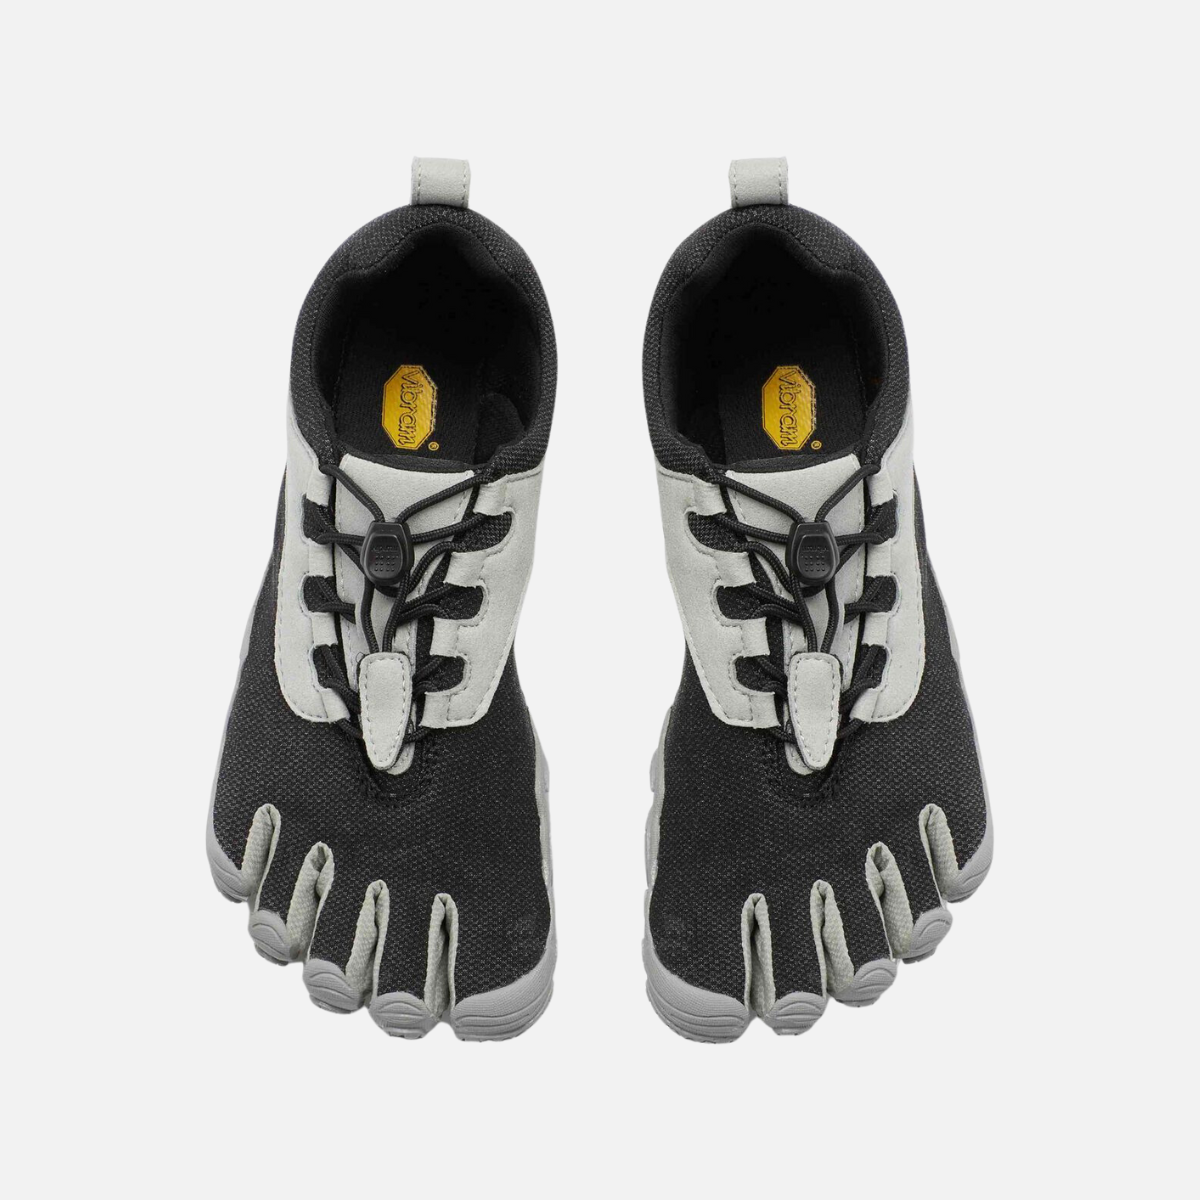 Vibram V-Run Retro Women's Barefoot Running Footwear -Black / Grey